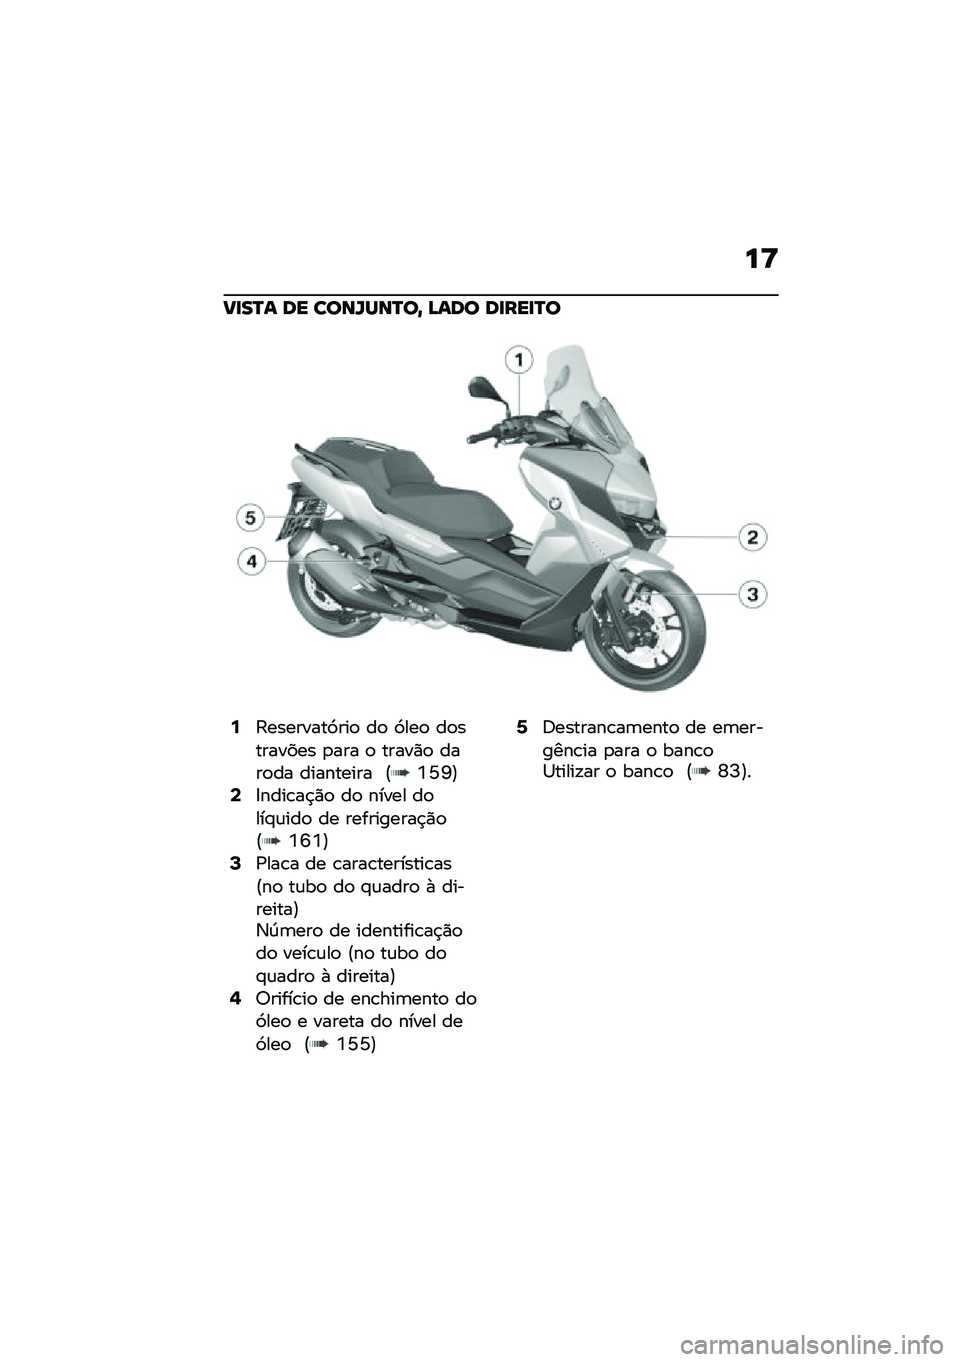 BMW MOTORRAD C 400 GT 2020  Manual do condutor (in Portuguese) ��<
��
��P� �� ����U���P��@ �>��� ��
���
�P�
�7�?��������>���
 ��
 �>���
 ��
�������� �
��� �
 �����)�
 ����
�� ��������� �E�7�Y�U�F�9�=��